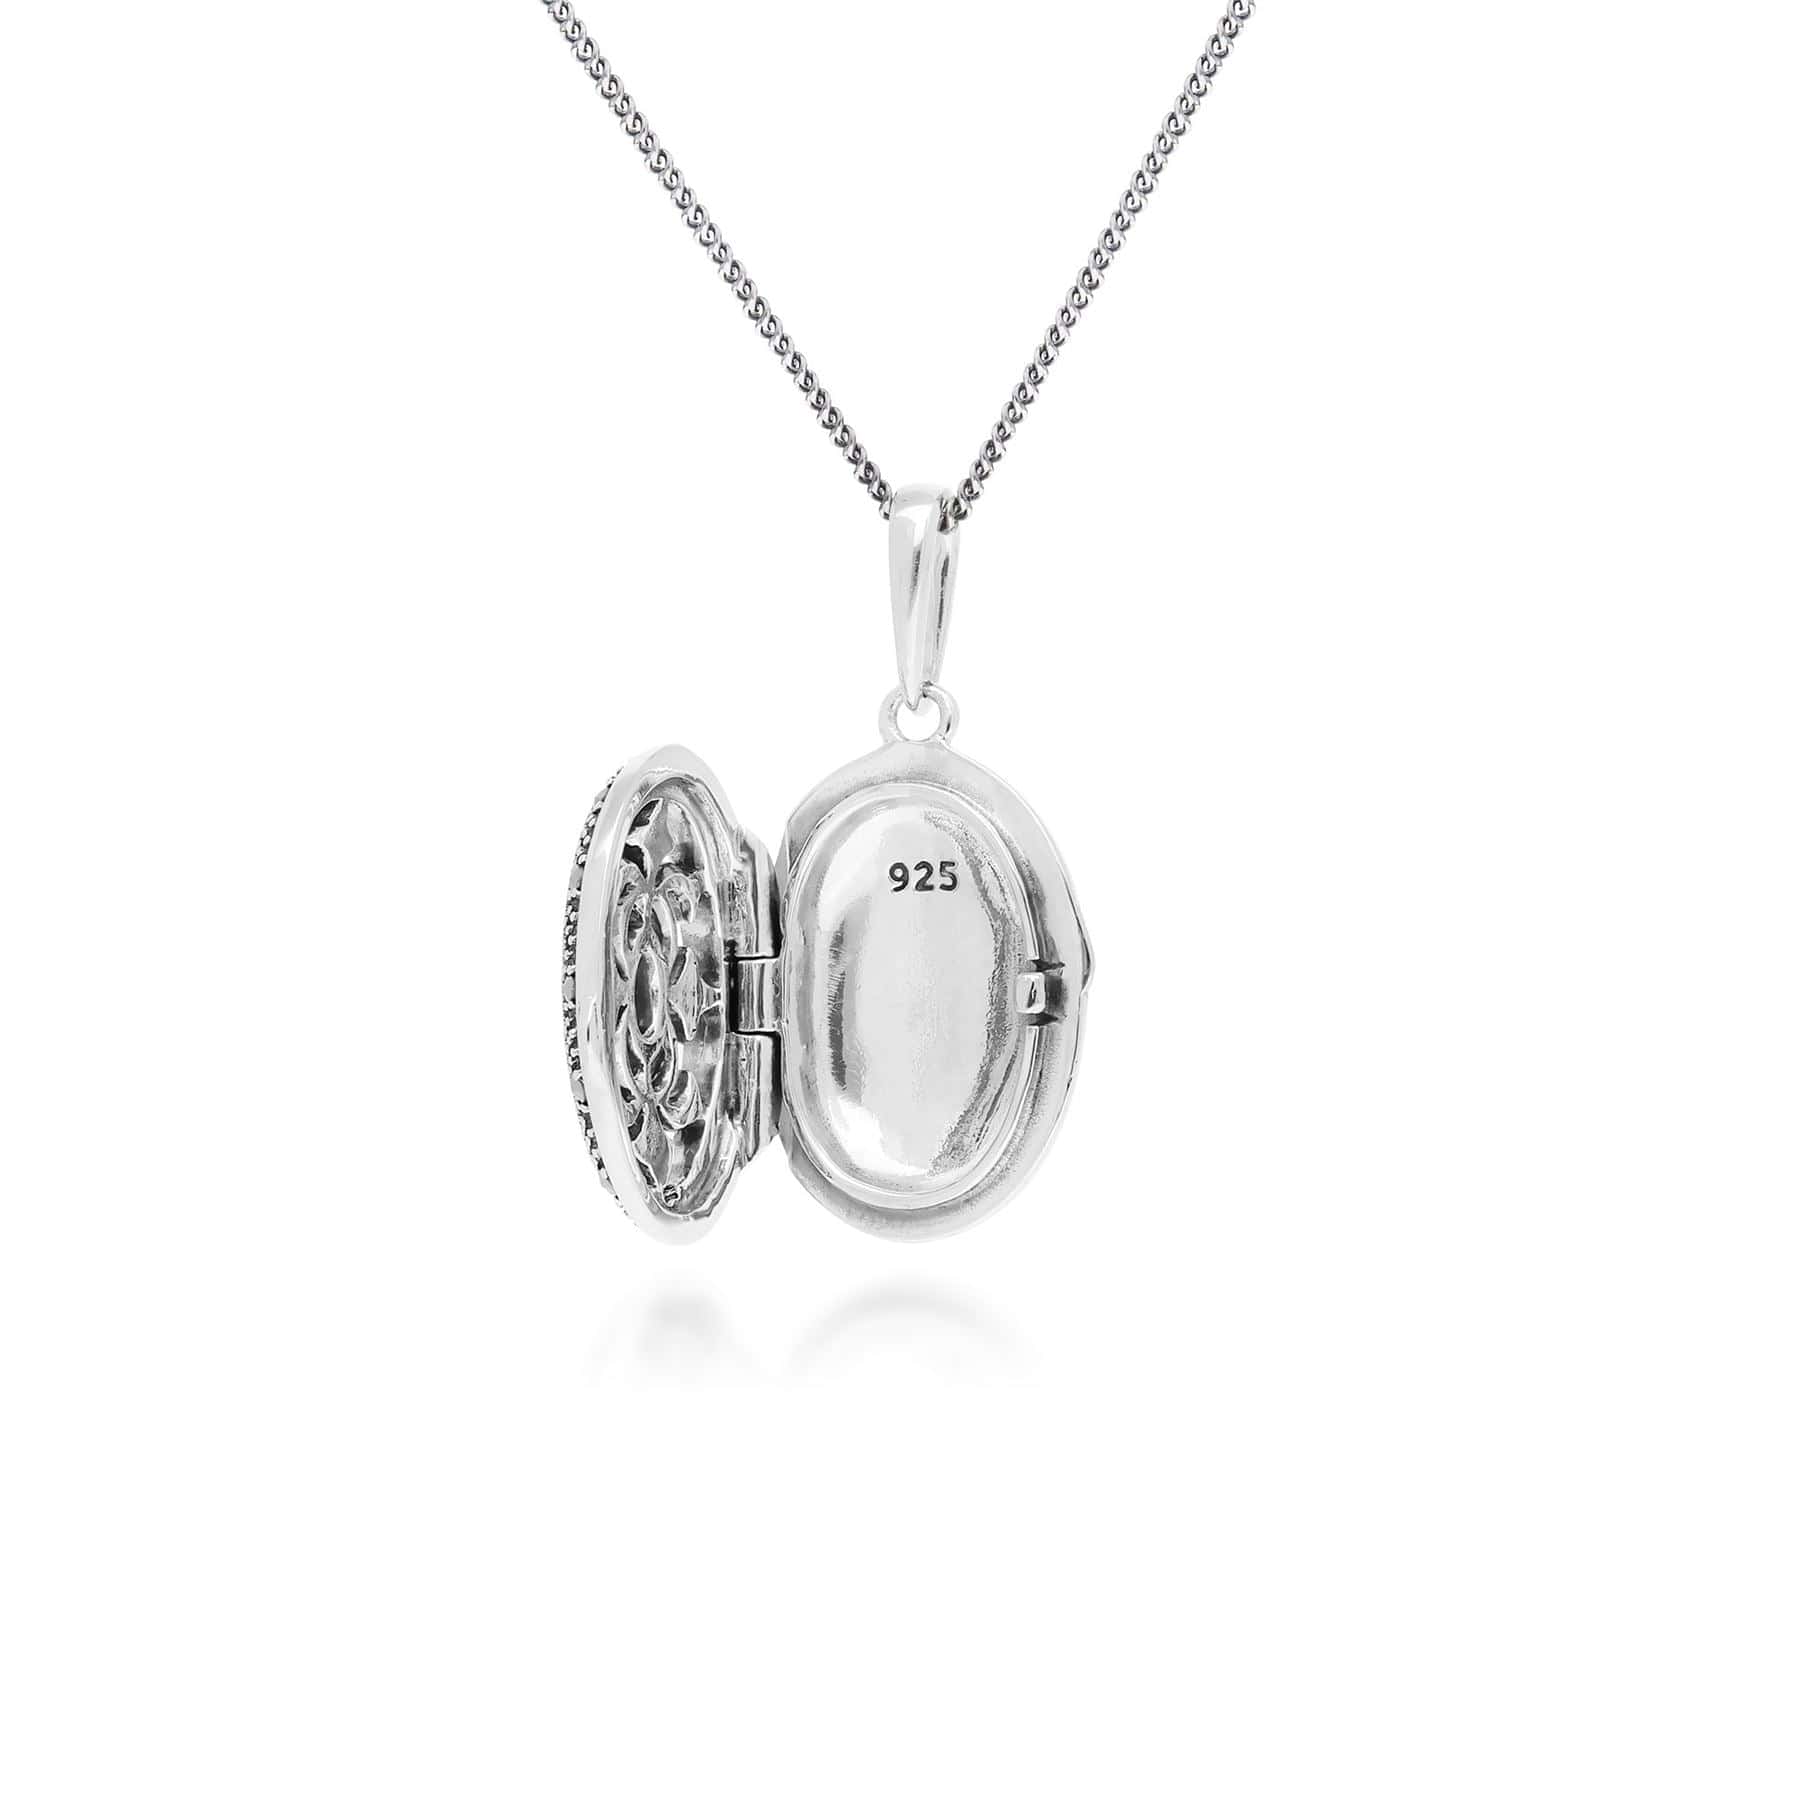 Art Nouveau Style Oval Aquamarine & Marcasite Locket Necklace in 925 Sterling Silver - Gemondo